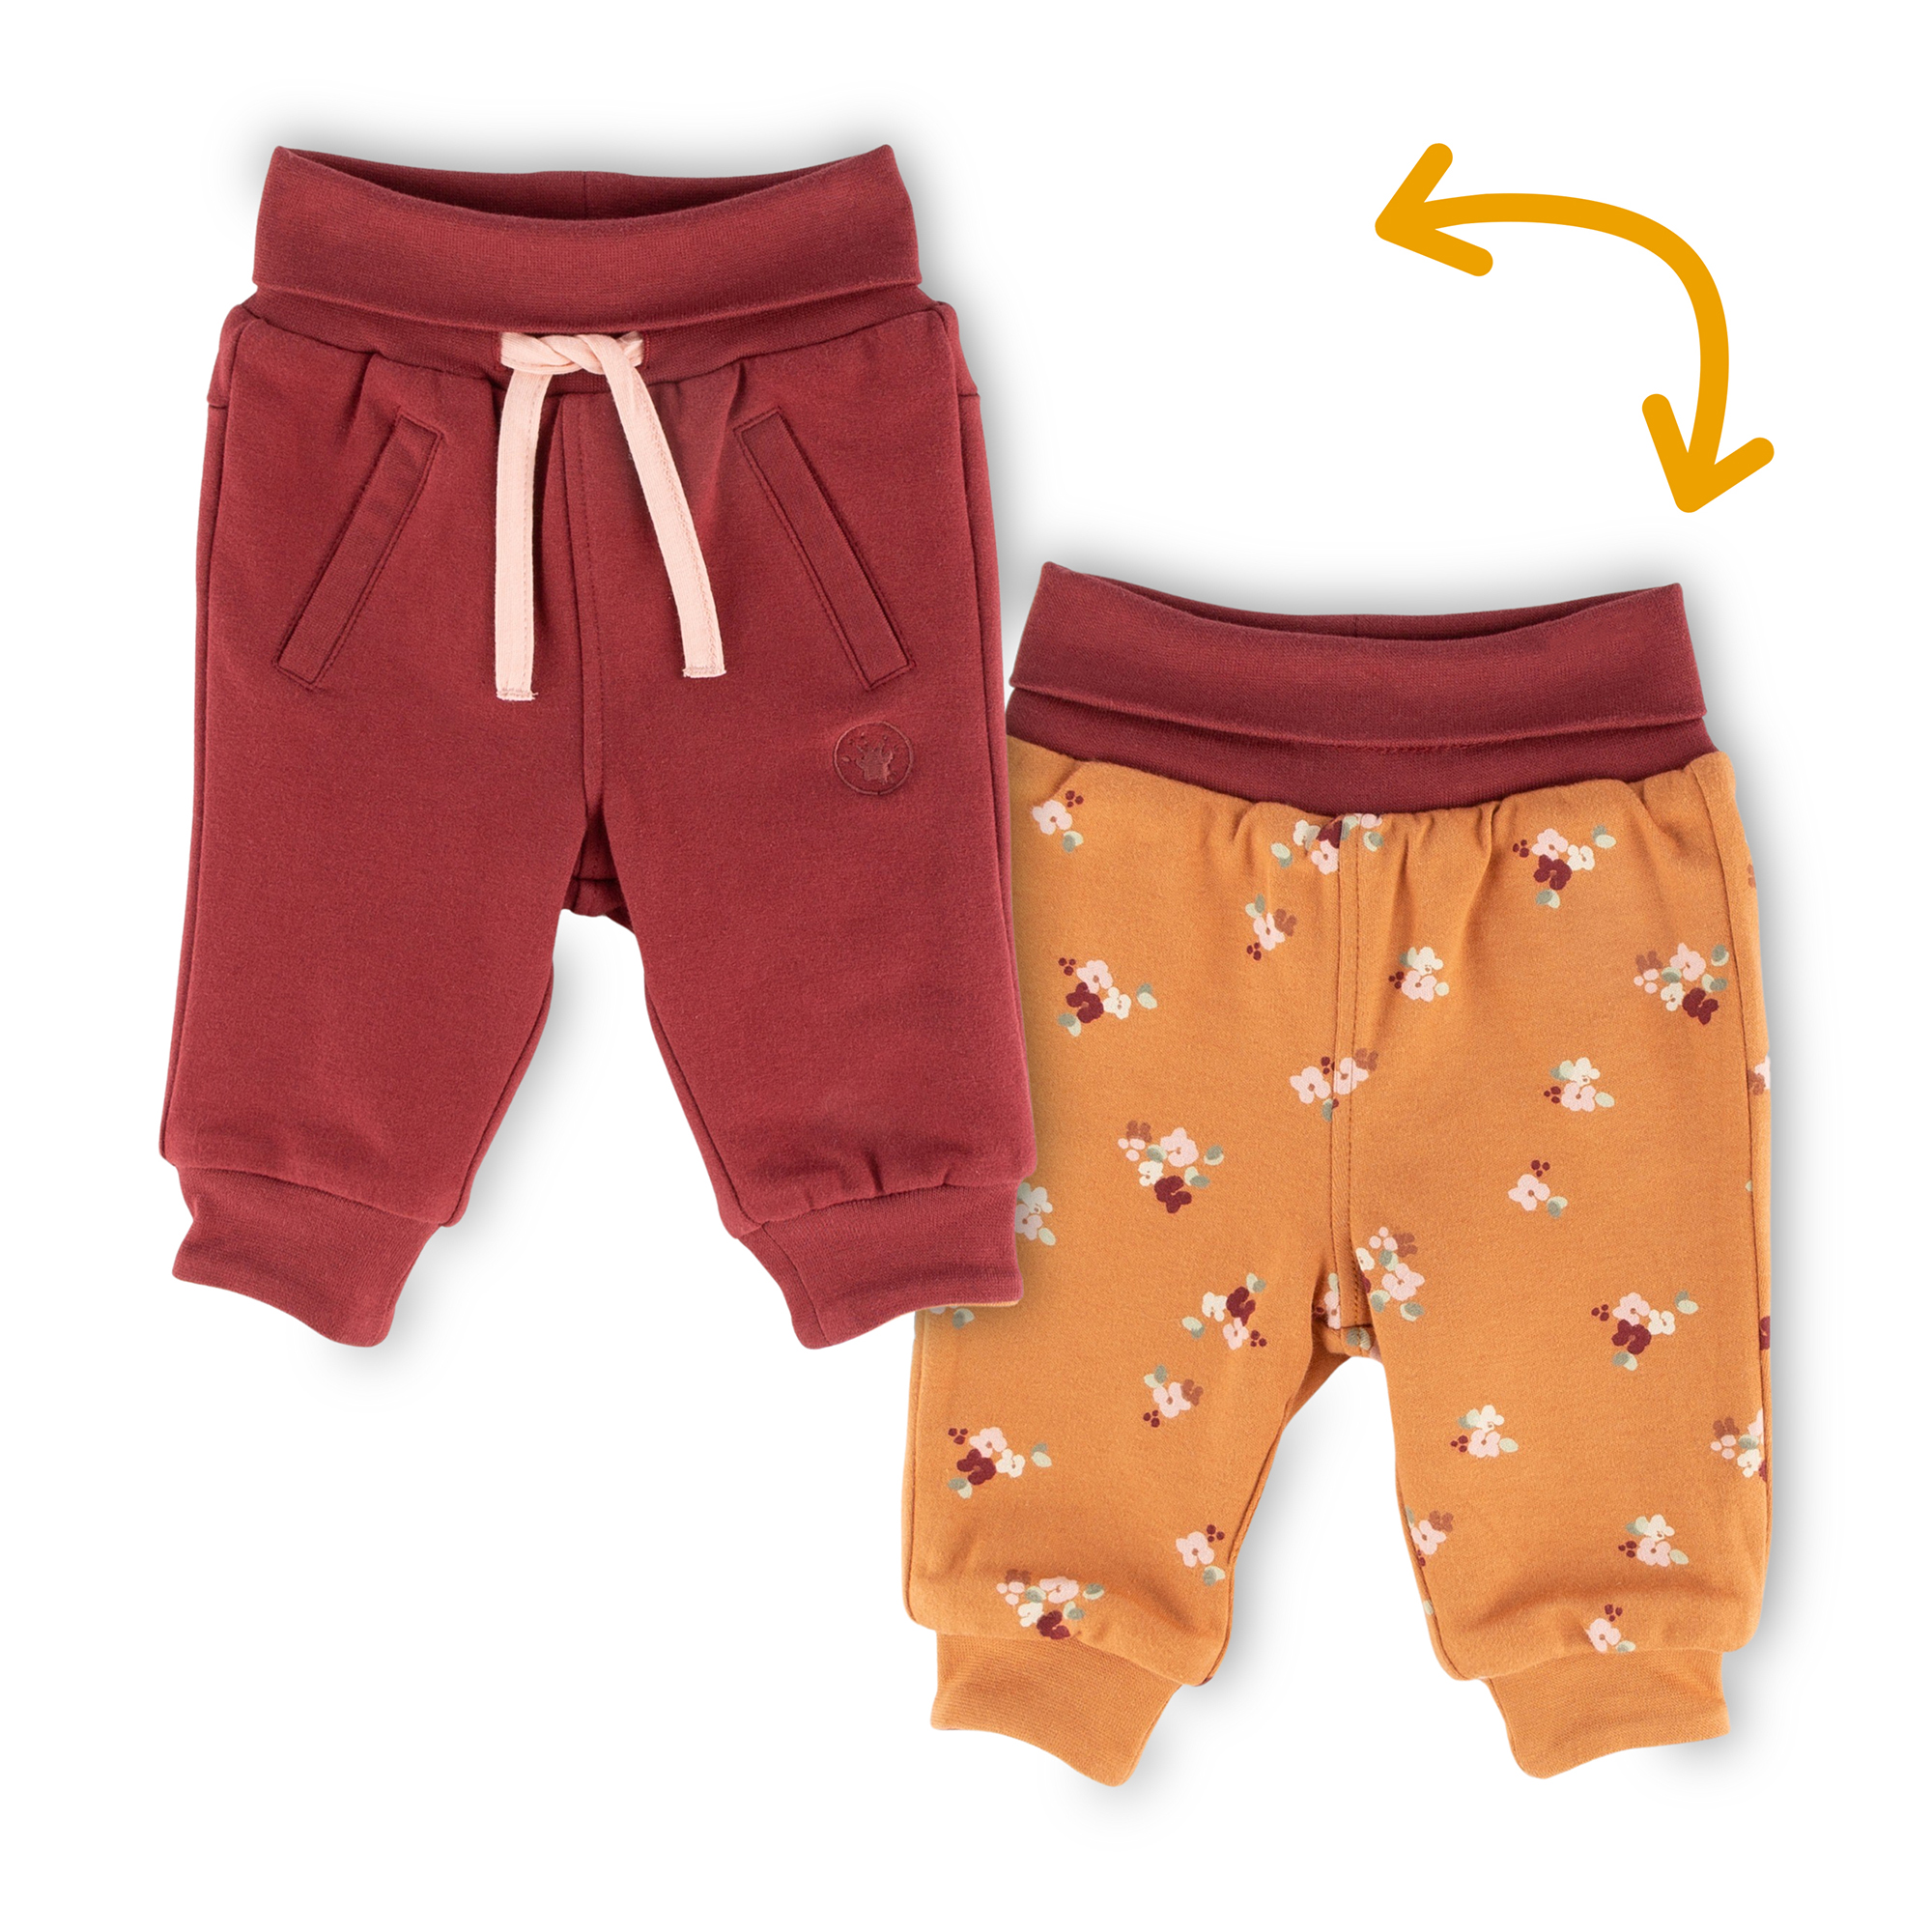 Reversible baby soft pants, dark red/caramel brown